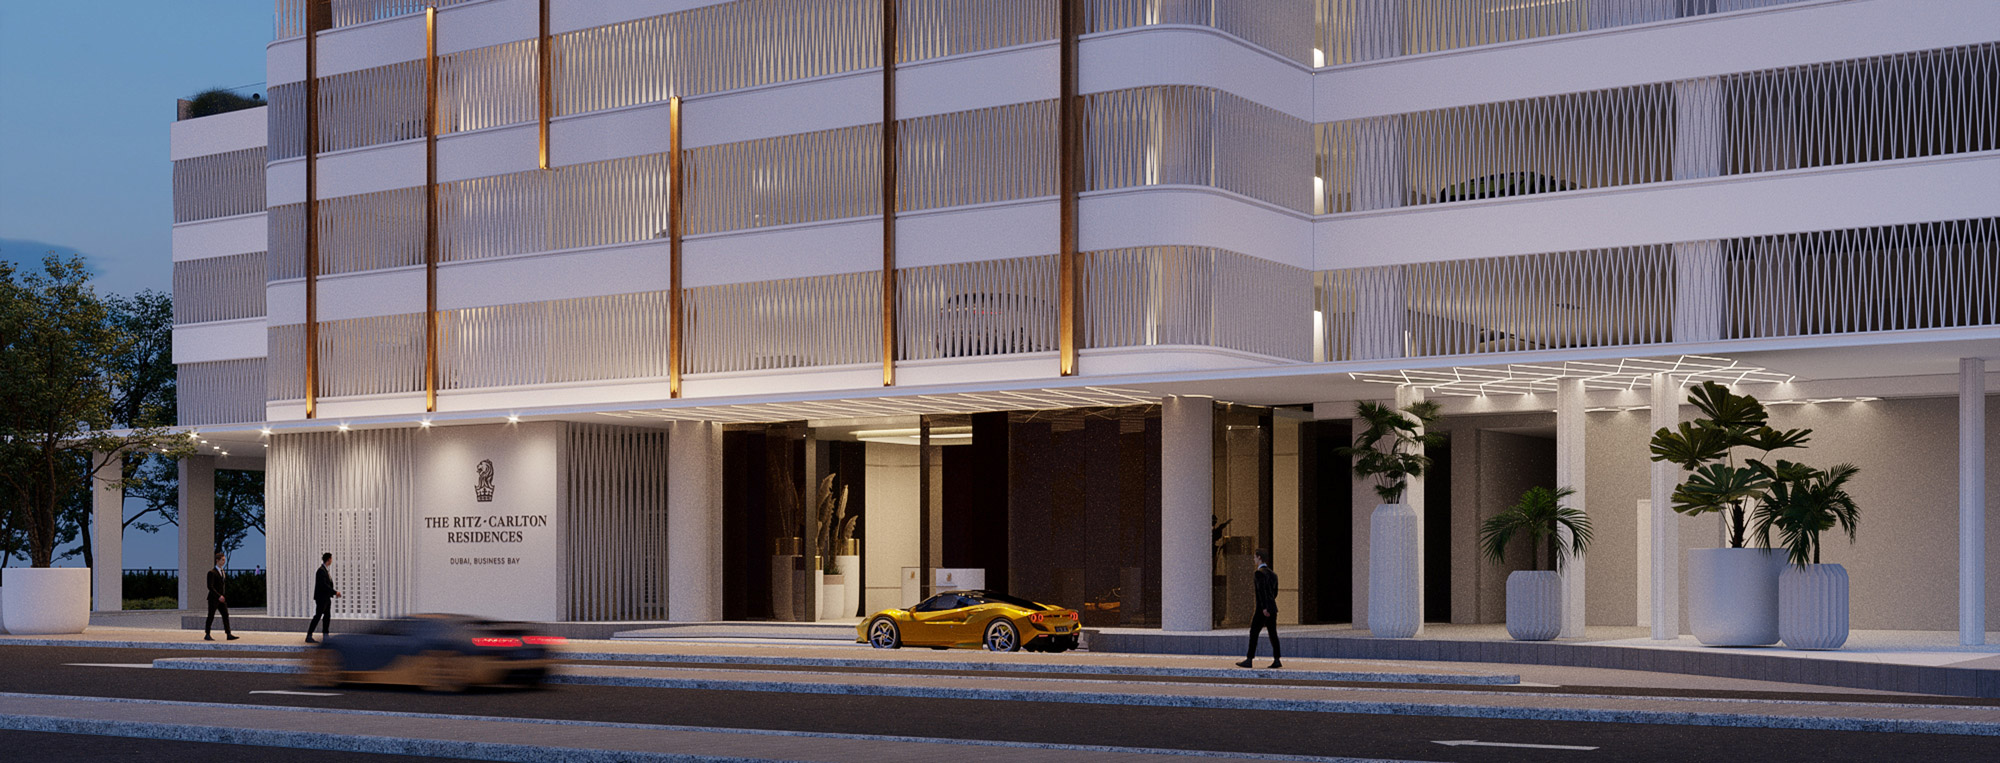 The Ritz-Carlton Residences Business Bay for Sale in Dubai